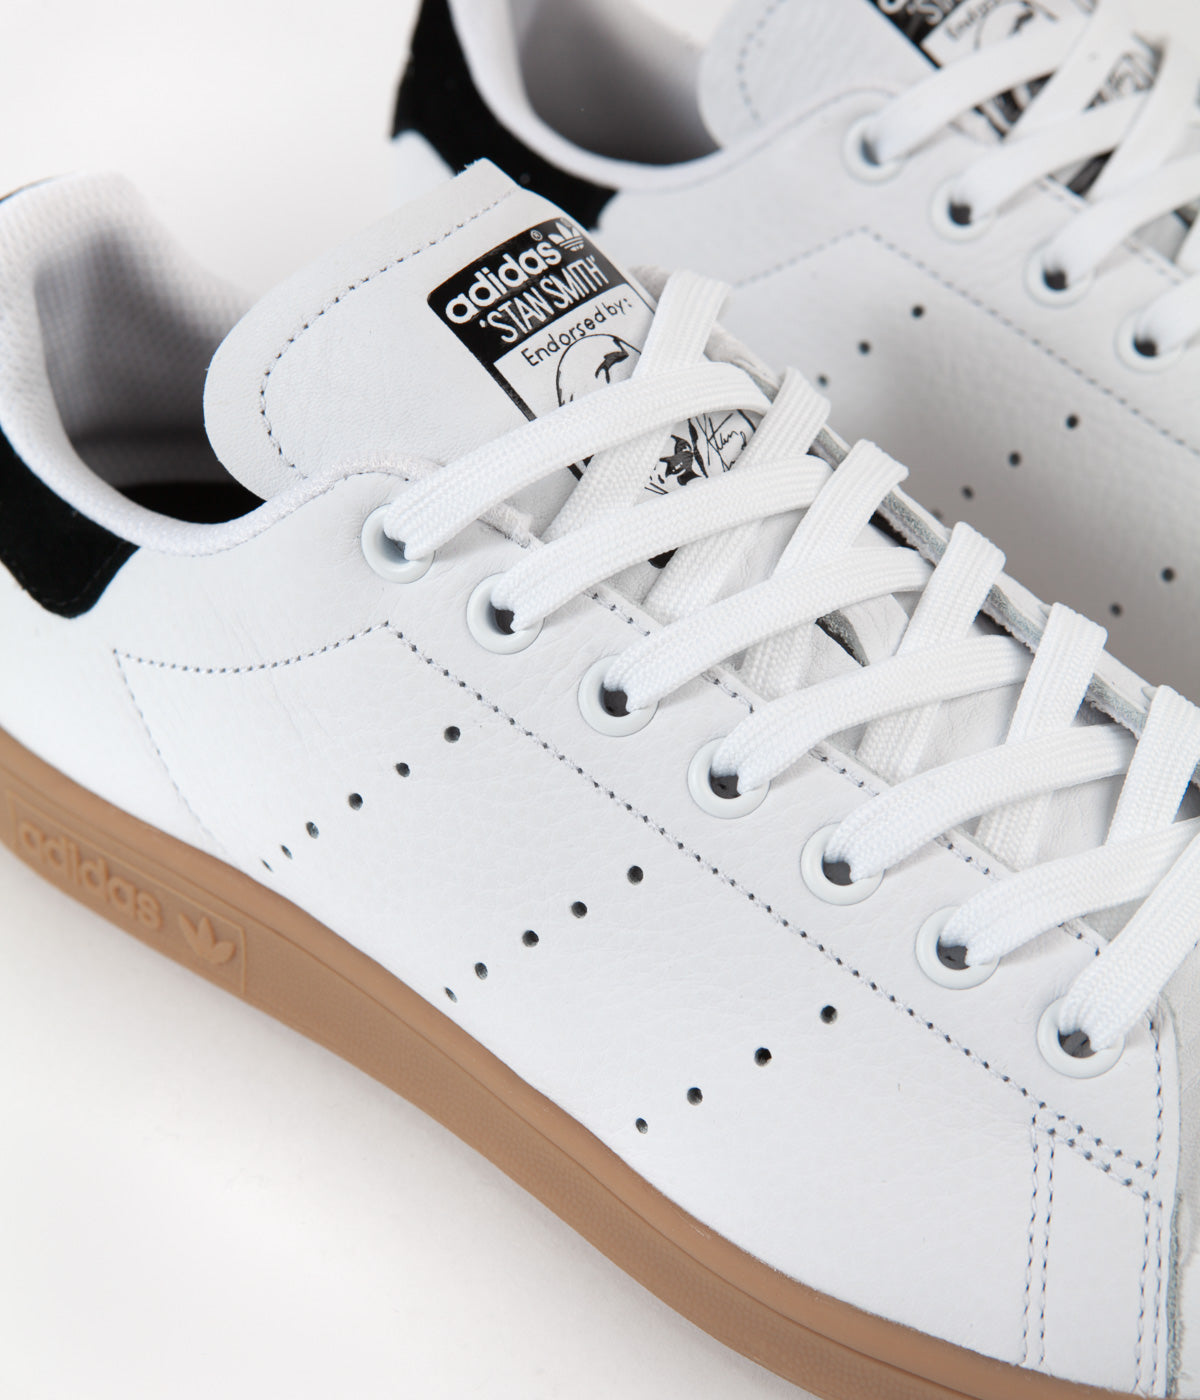 Adidas Stan Smith Adv Shoes - White / Core Black / Gum4 | Flatspot